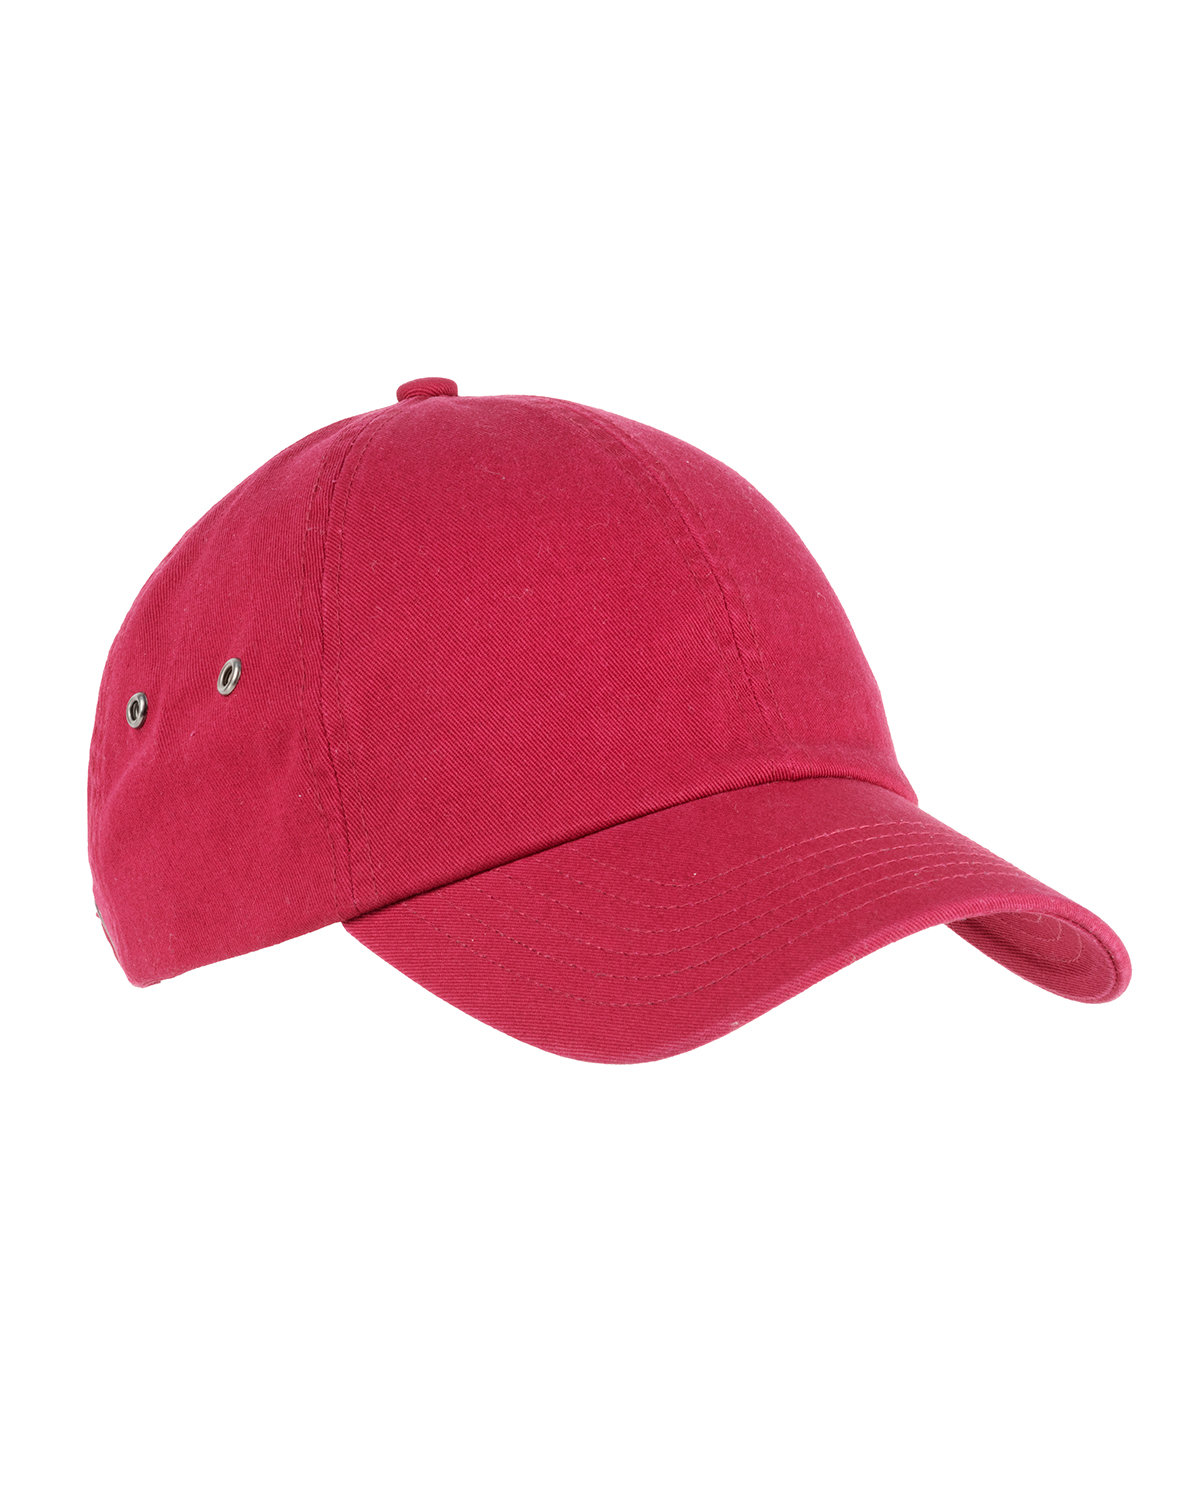 Suede Simple Plain Children Baseball Cap (Pink)